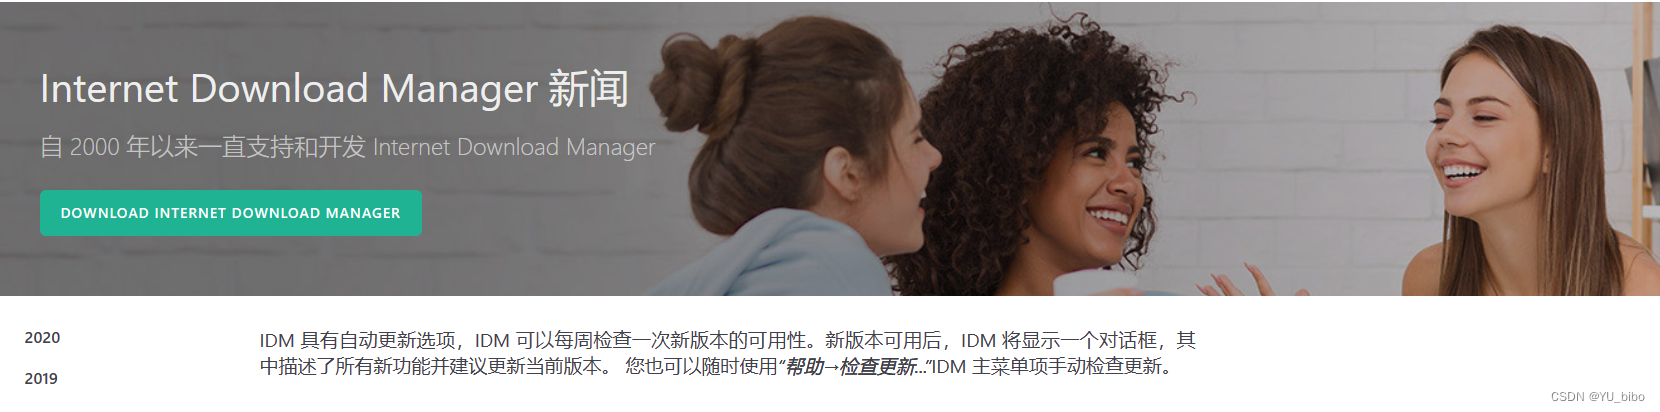 Internet Download Manager 6.42.3 (IDM) 中文破解免激活绿色版